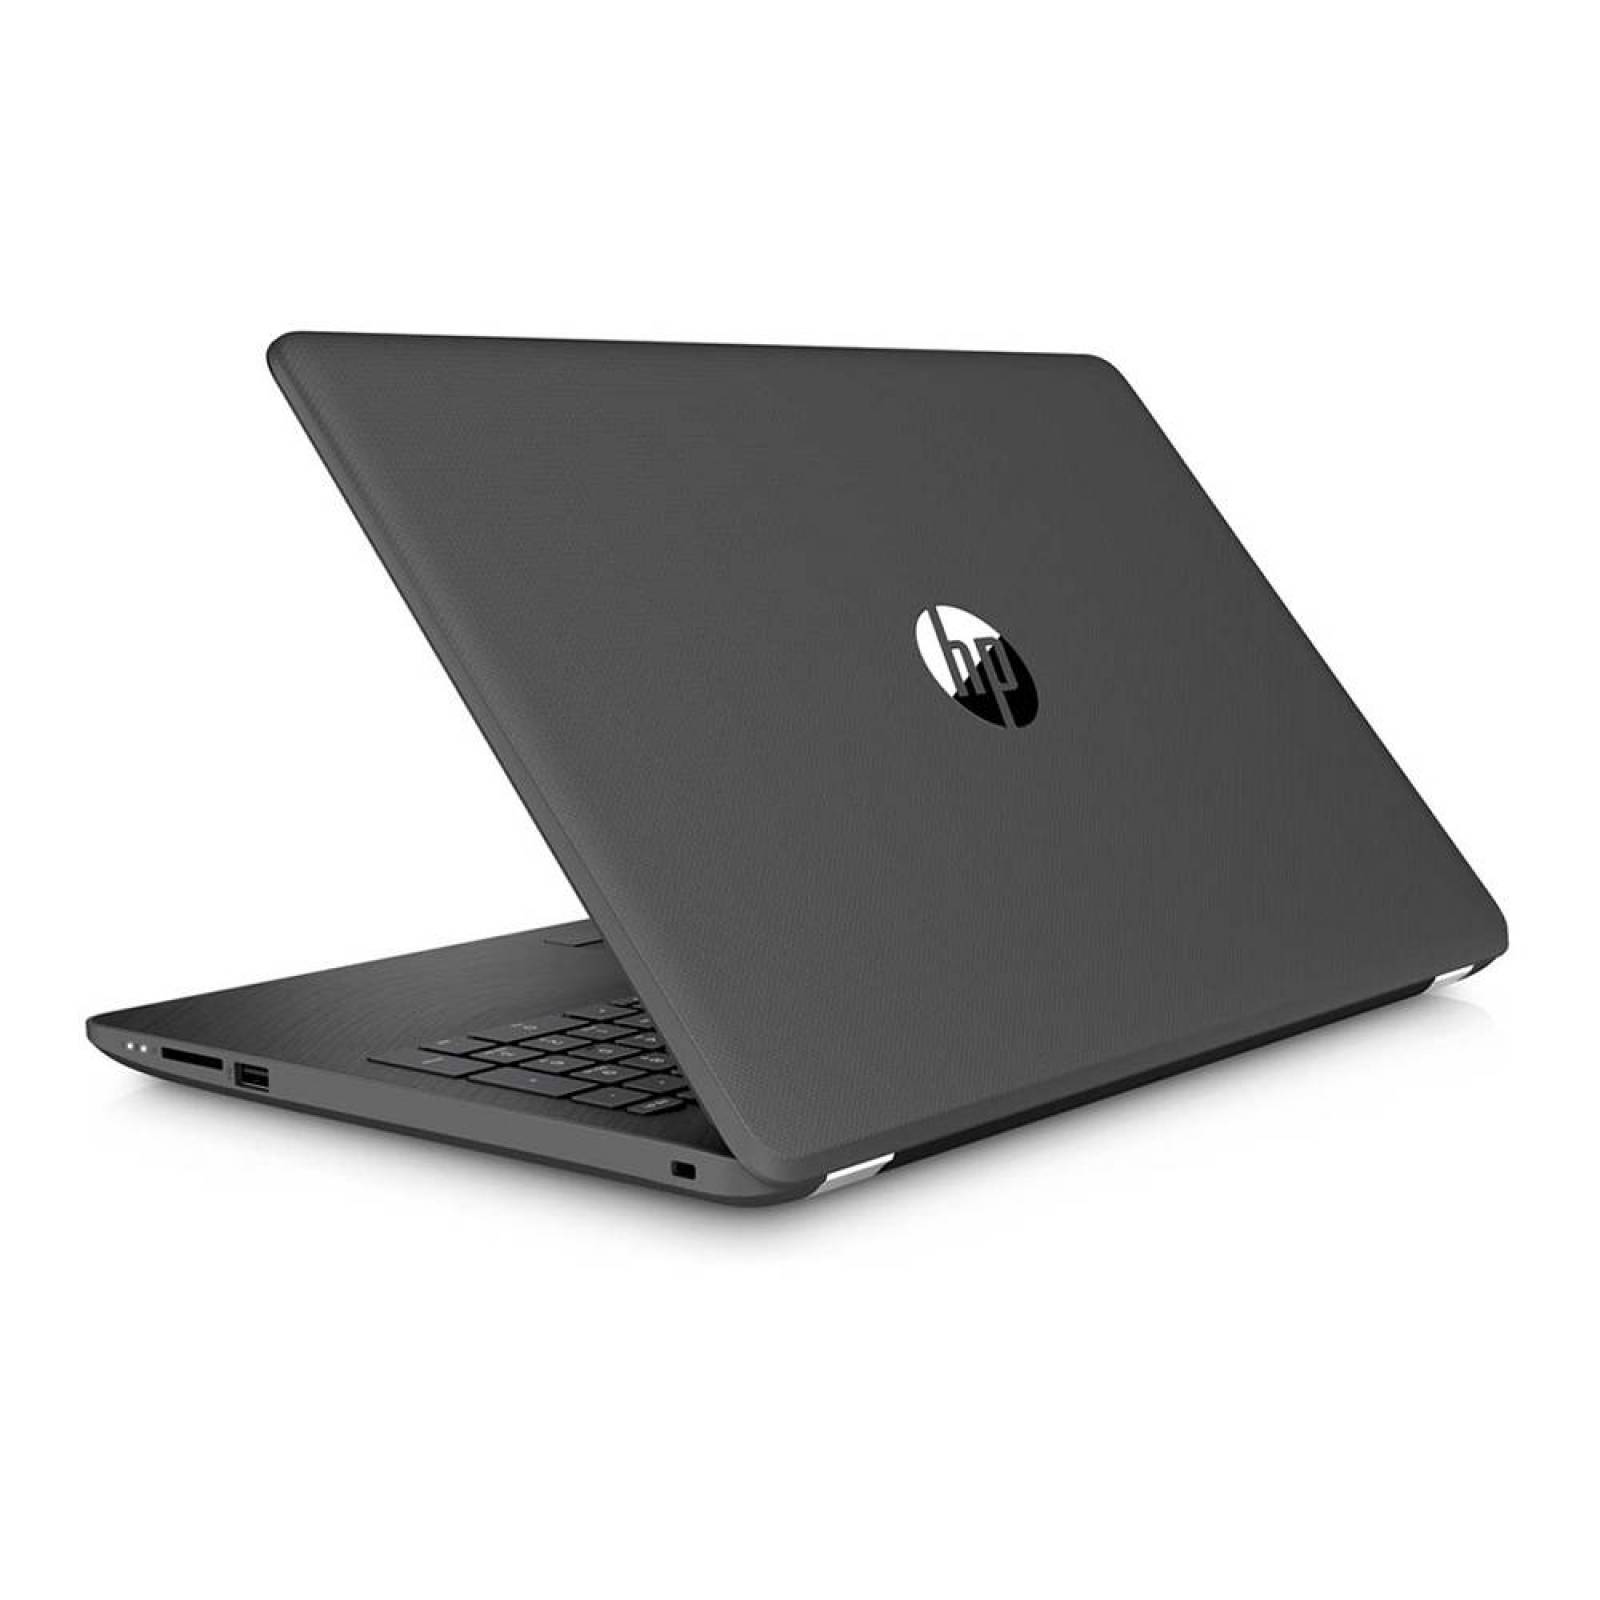 Laptop HP 15.6 2TB/8GB i7-7500U DVD 15-BS078 - Reacondicionado